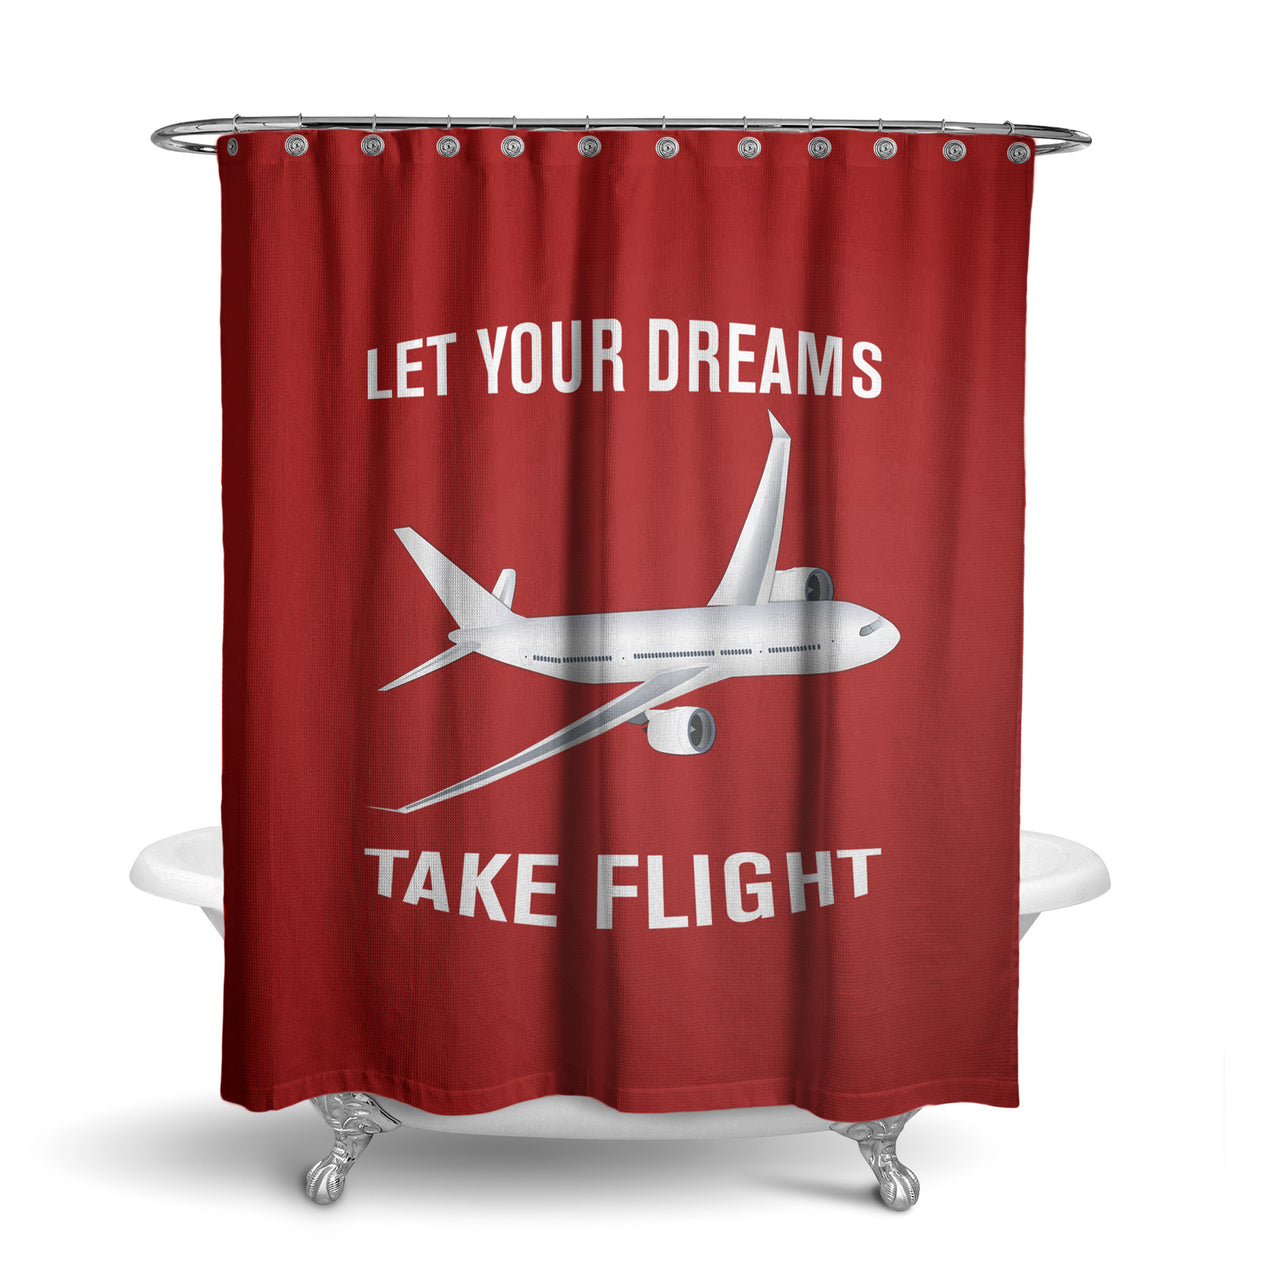 Let Your Dreams Take Flight Designed Shower Curtains